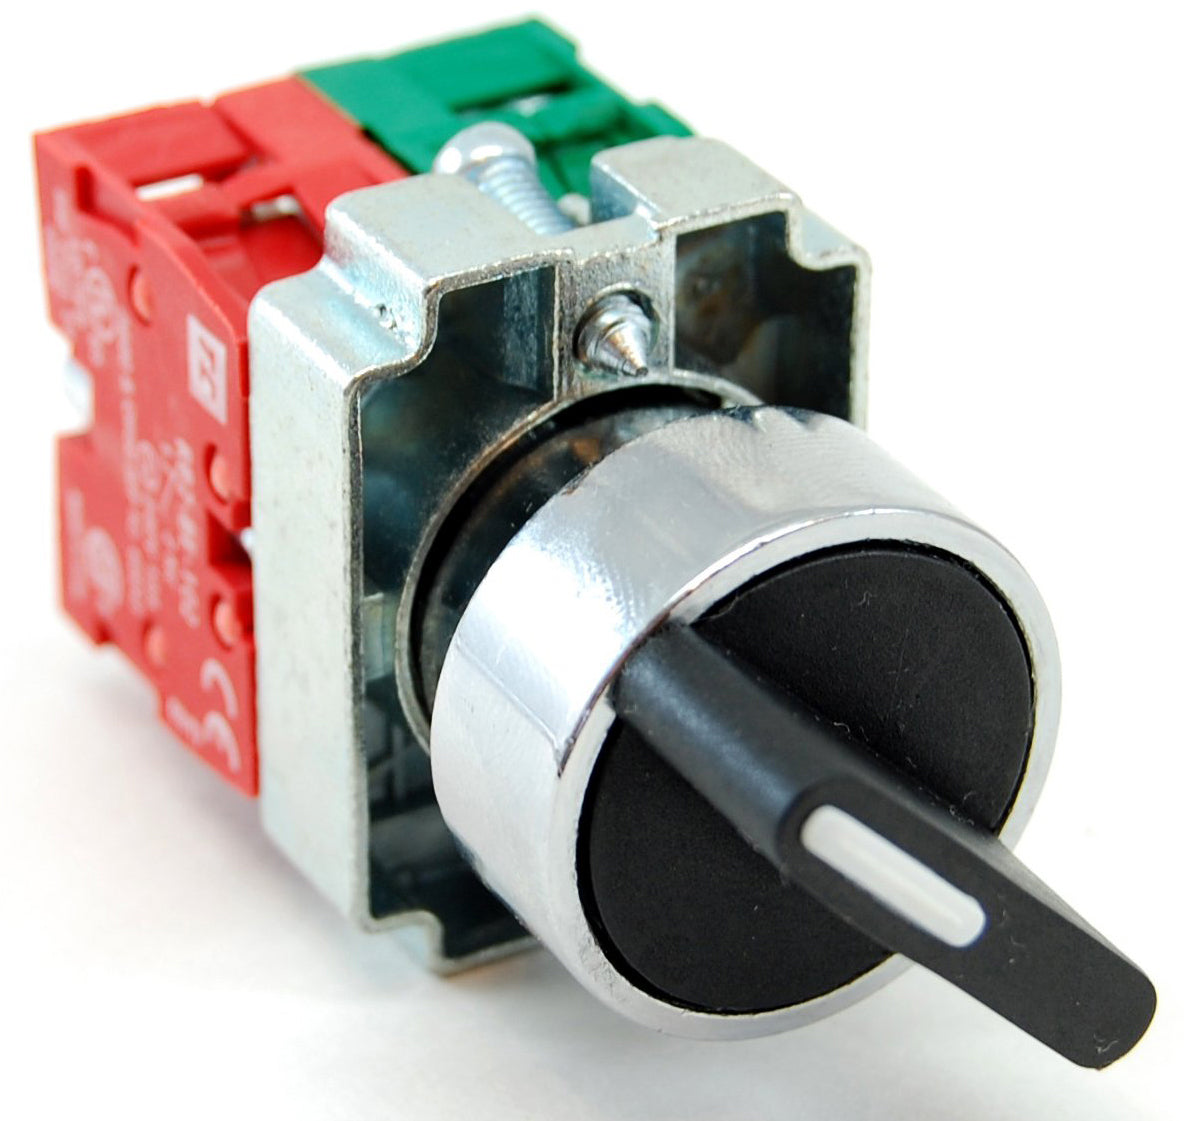 NHD nss22-s110 2-позиционный переключатель. No NC контактор. Xb4-be101. 3d model22mm latching 2 no 3-position Rotary Selector select Switch zb2-be101c Black | Switches.